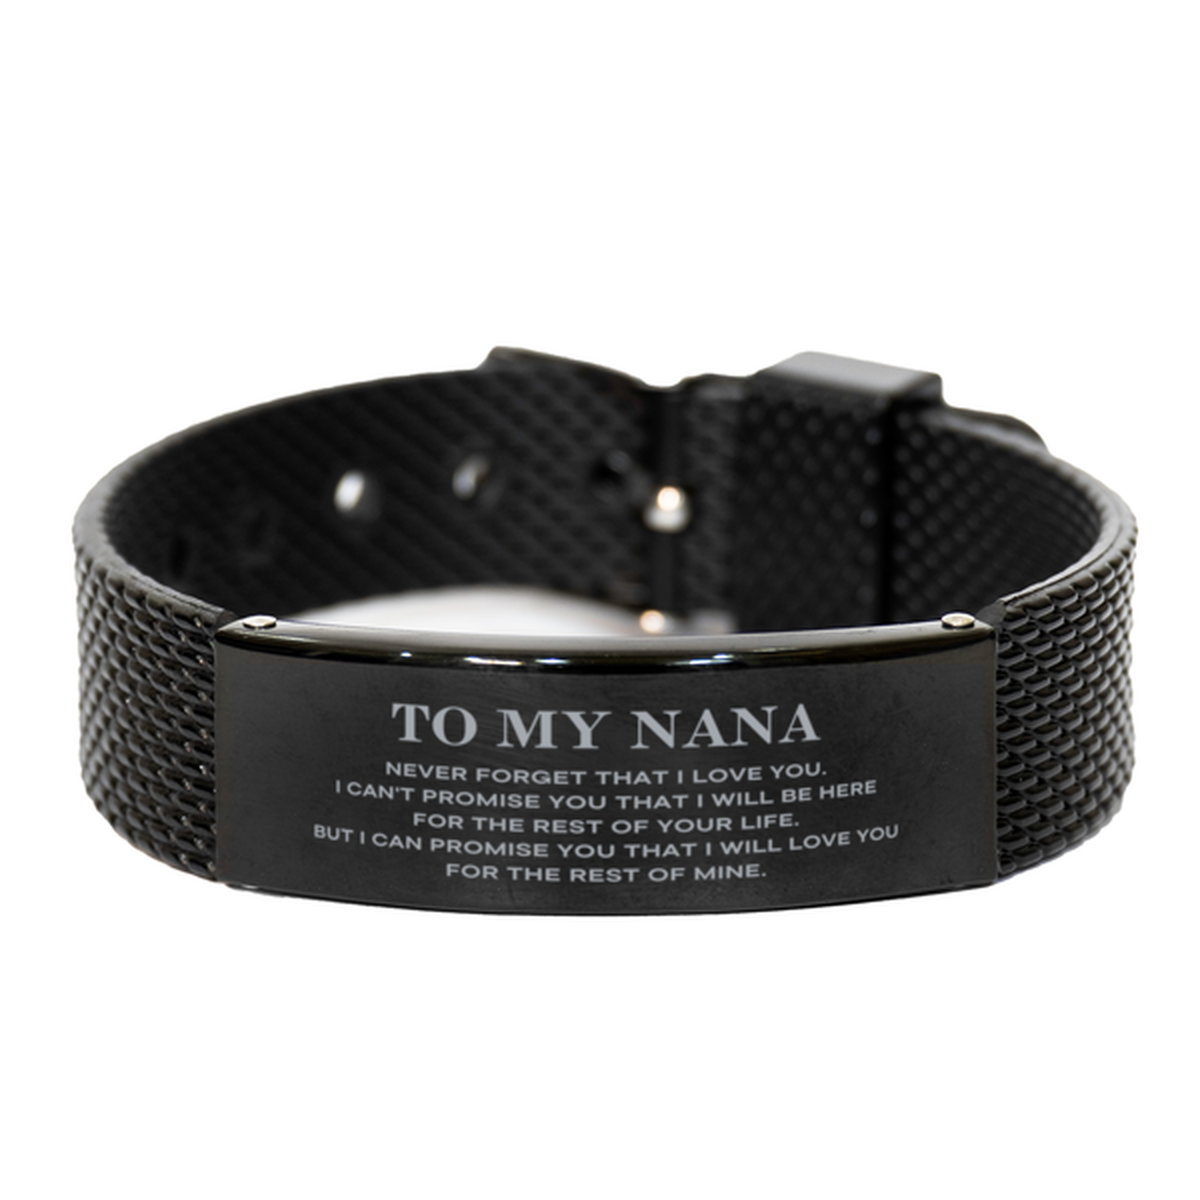 To My Nana Gifts, I will love you for the rest of mine, Love Nana Bracelet, Birthday Christmas Unique Black Shark Mesh Bracelet For Nana